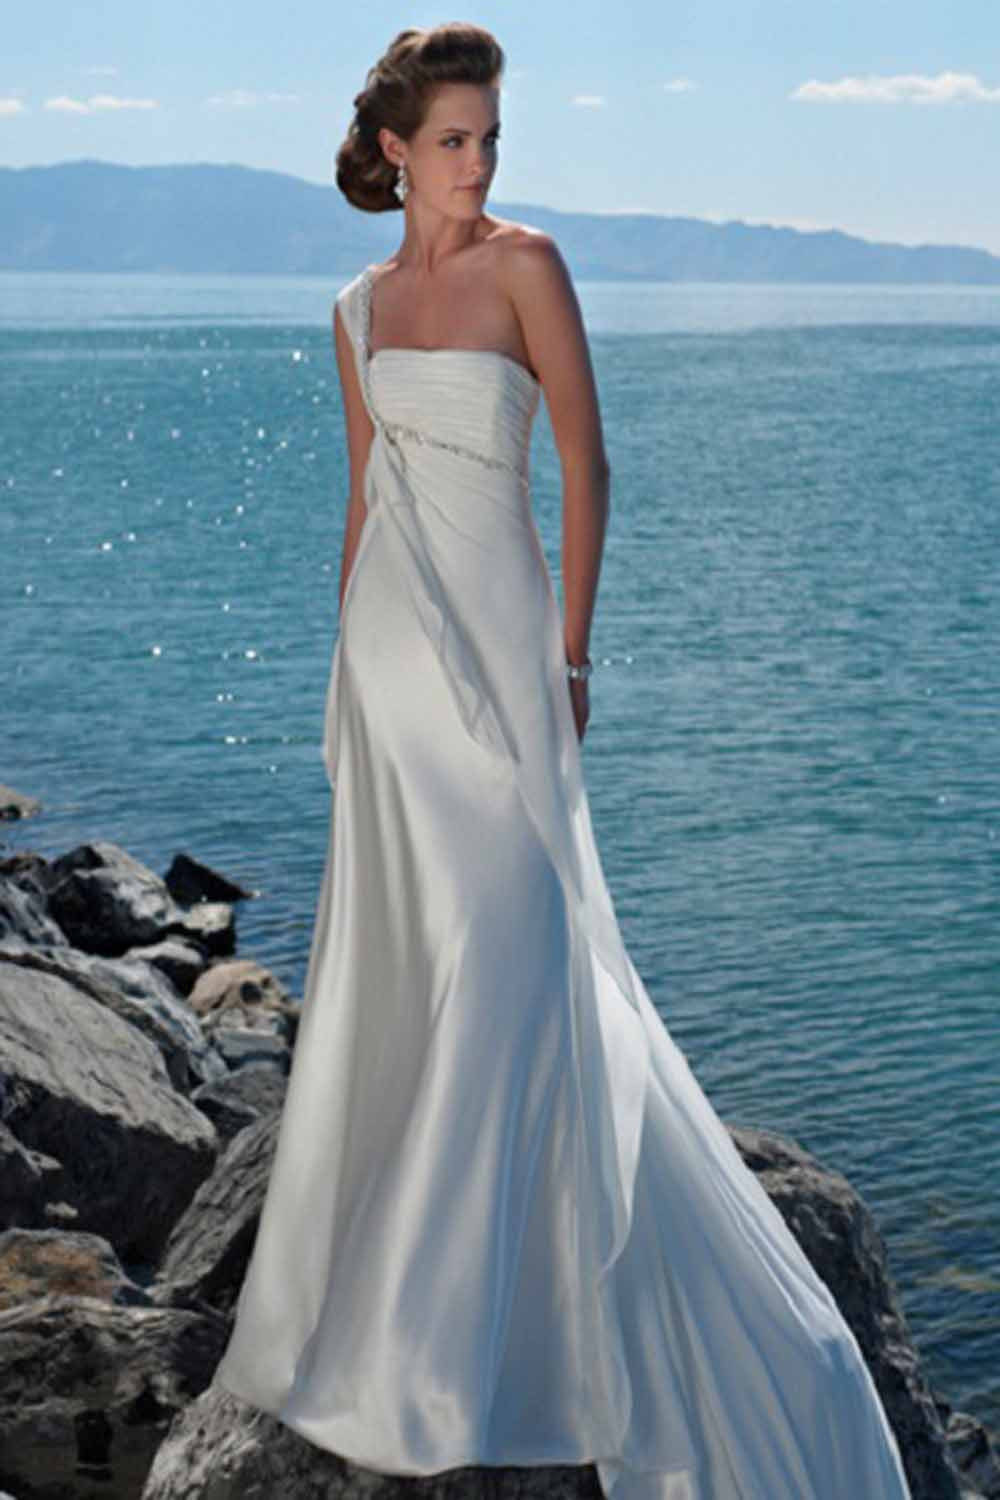 Strapless Beach Wedding Dresses
 Different Styles of Beach Wedding Dresses